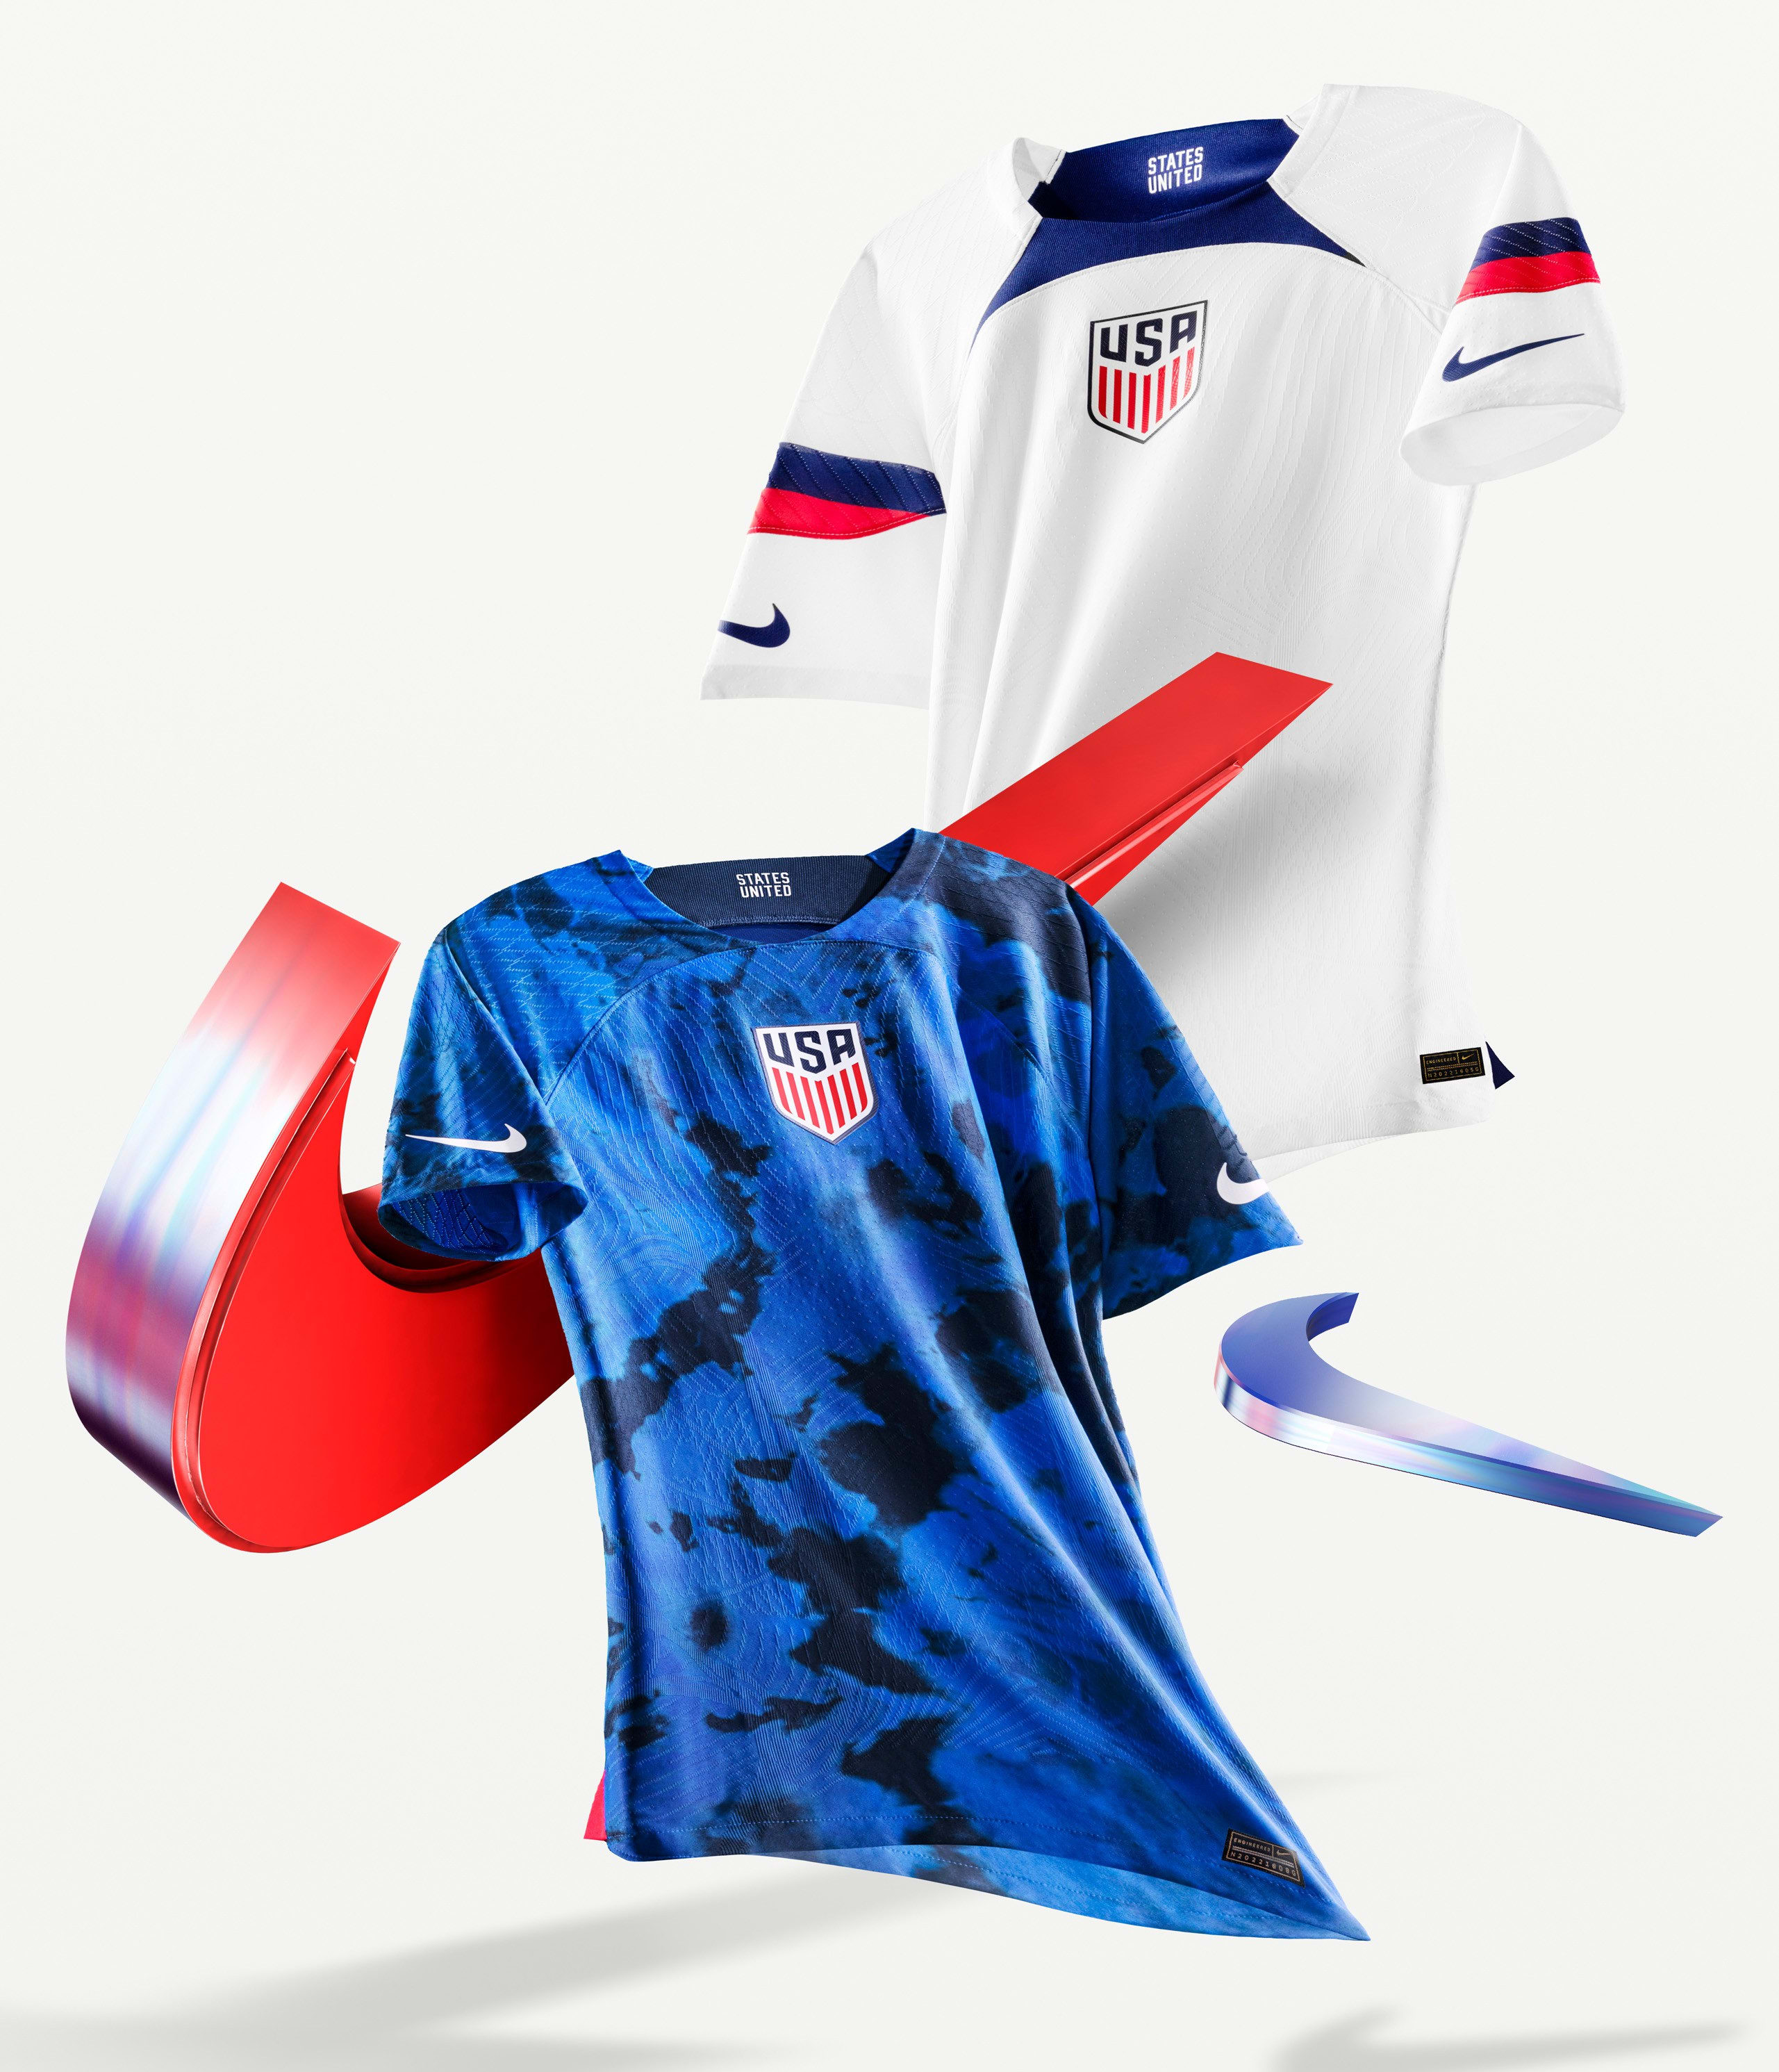 Decremento parrilla Hazme Nike 2022 World Cup Qatar Jerseys Release Date September | Sole Collector